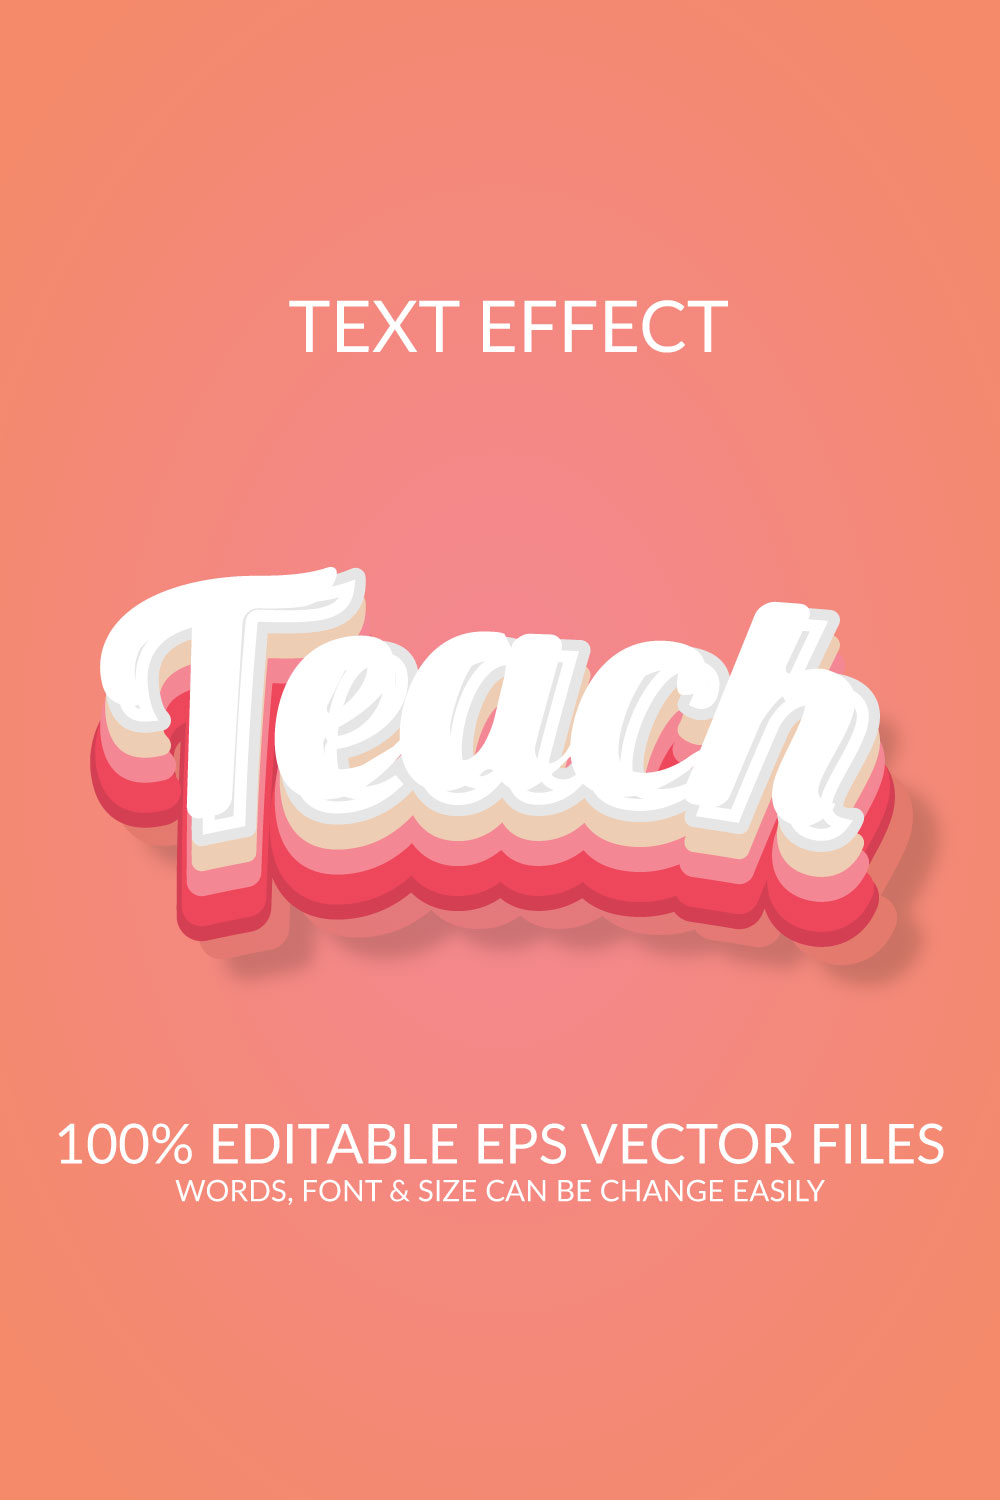 Teach 3d text effect template pinterest preview image.